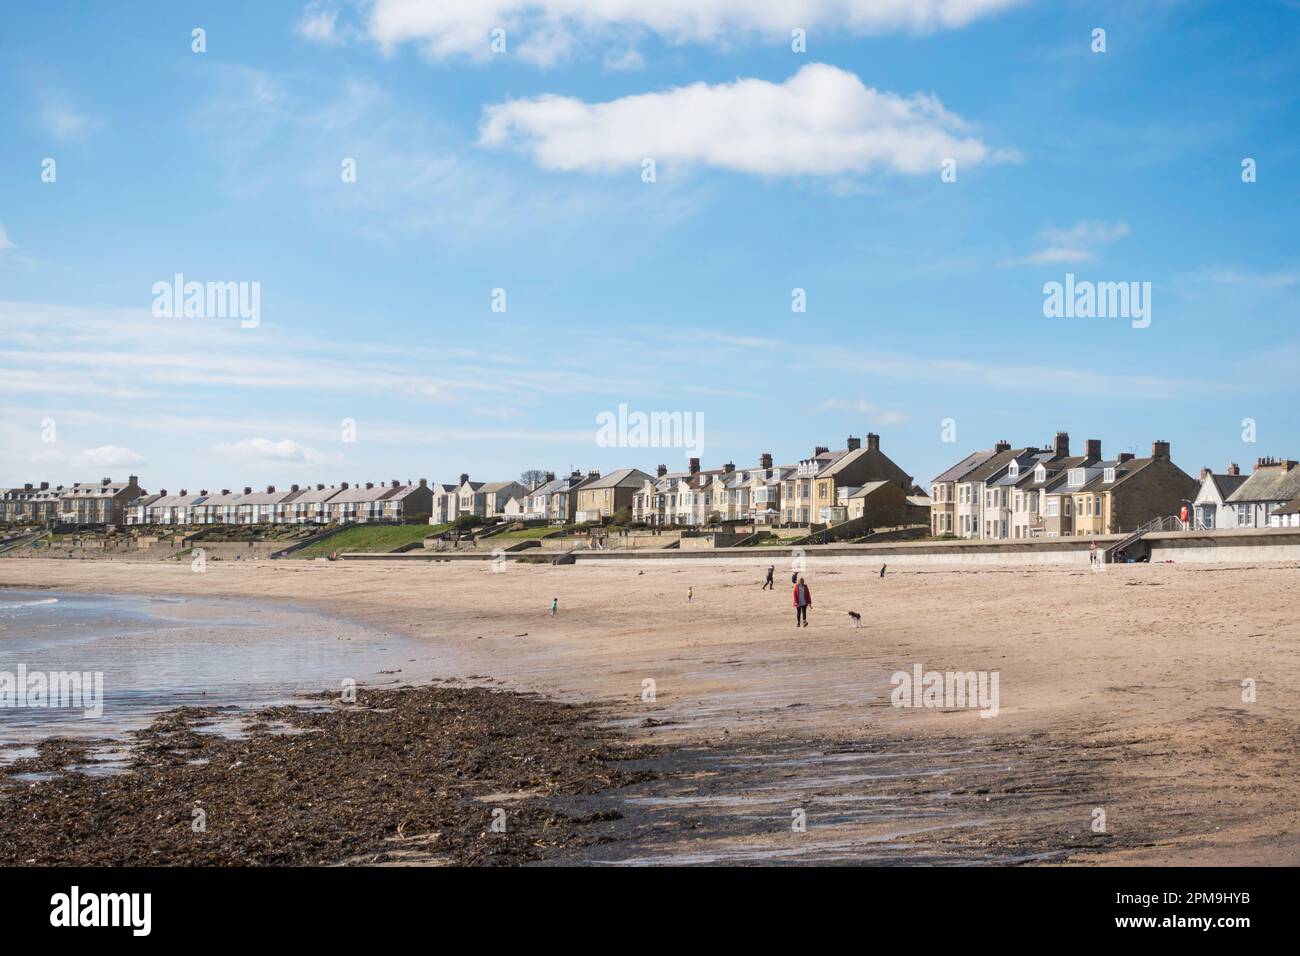 People walking on the beach at Newbiggin by the Sea, Northumberland, England, UK Stock Photo